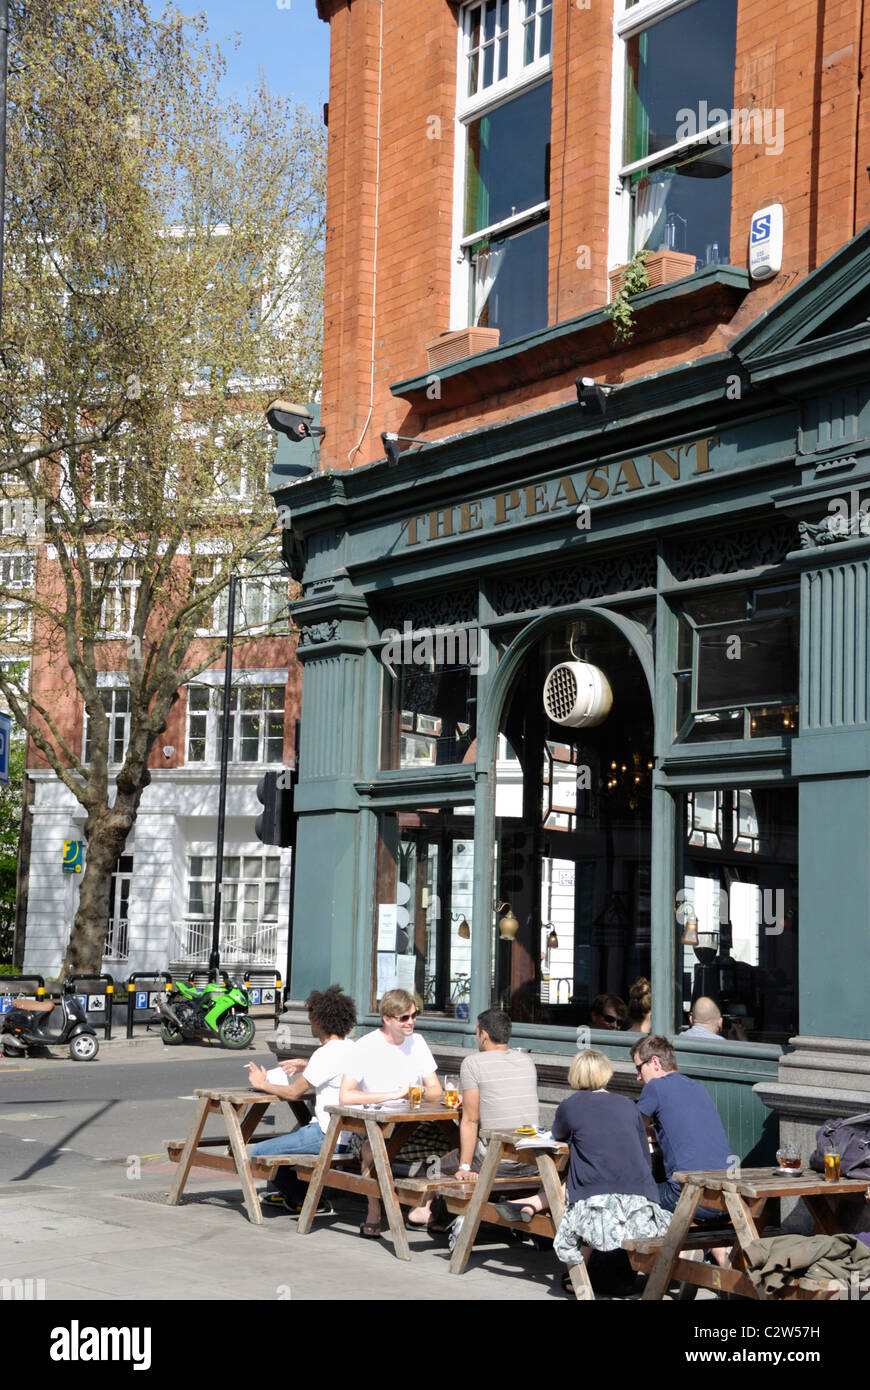 The Peasant pub in St John Street, Clerkenwell, London, England Stock Photo